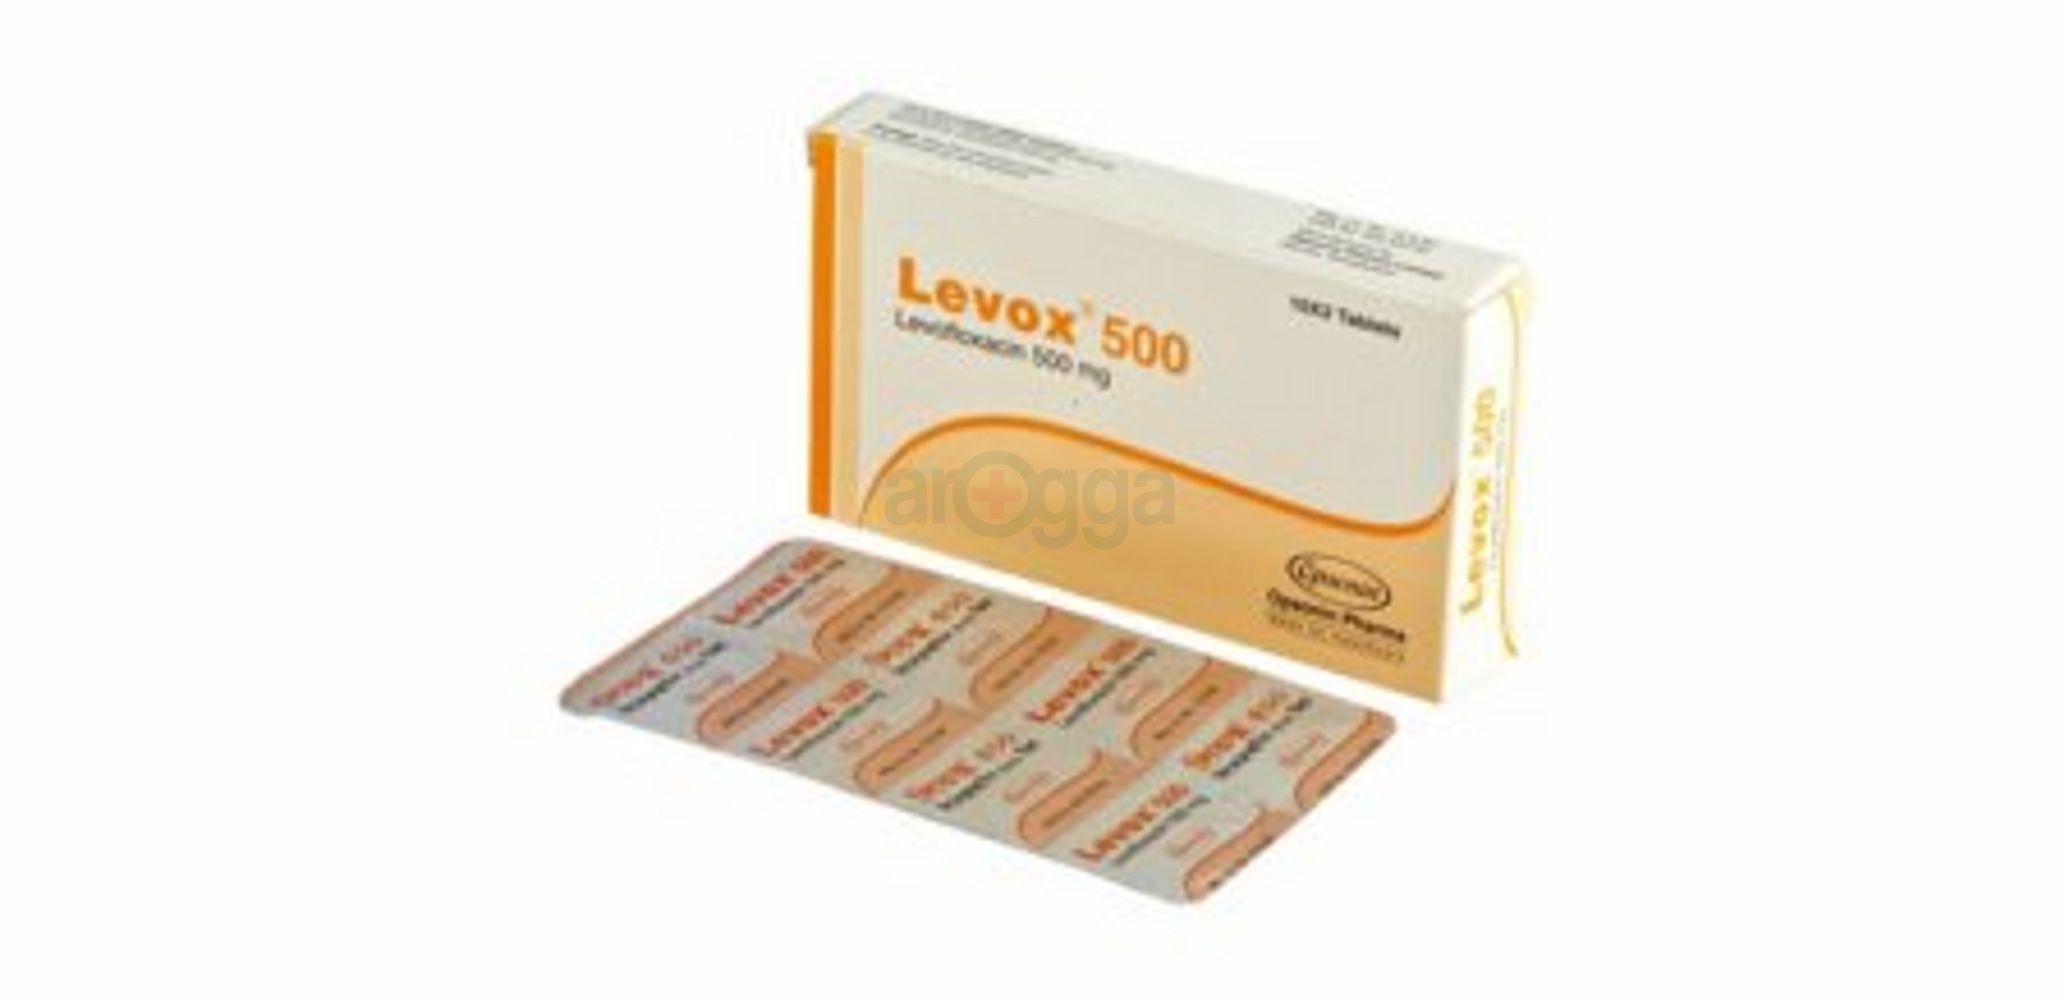 Levox 500